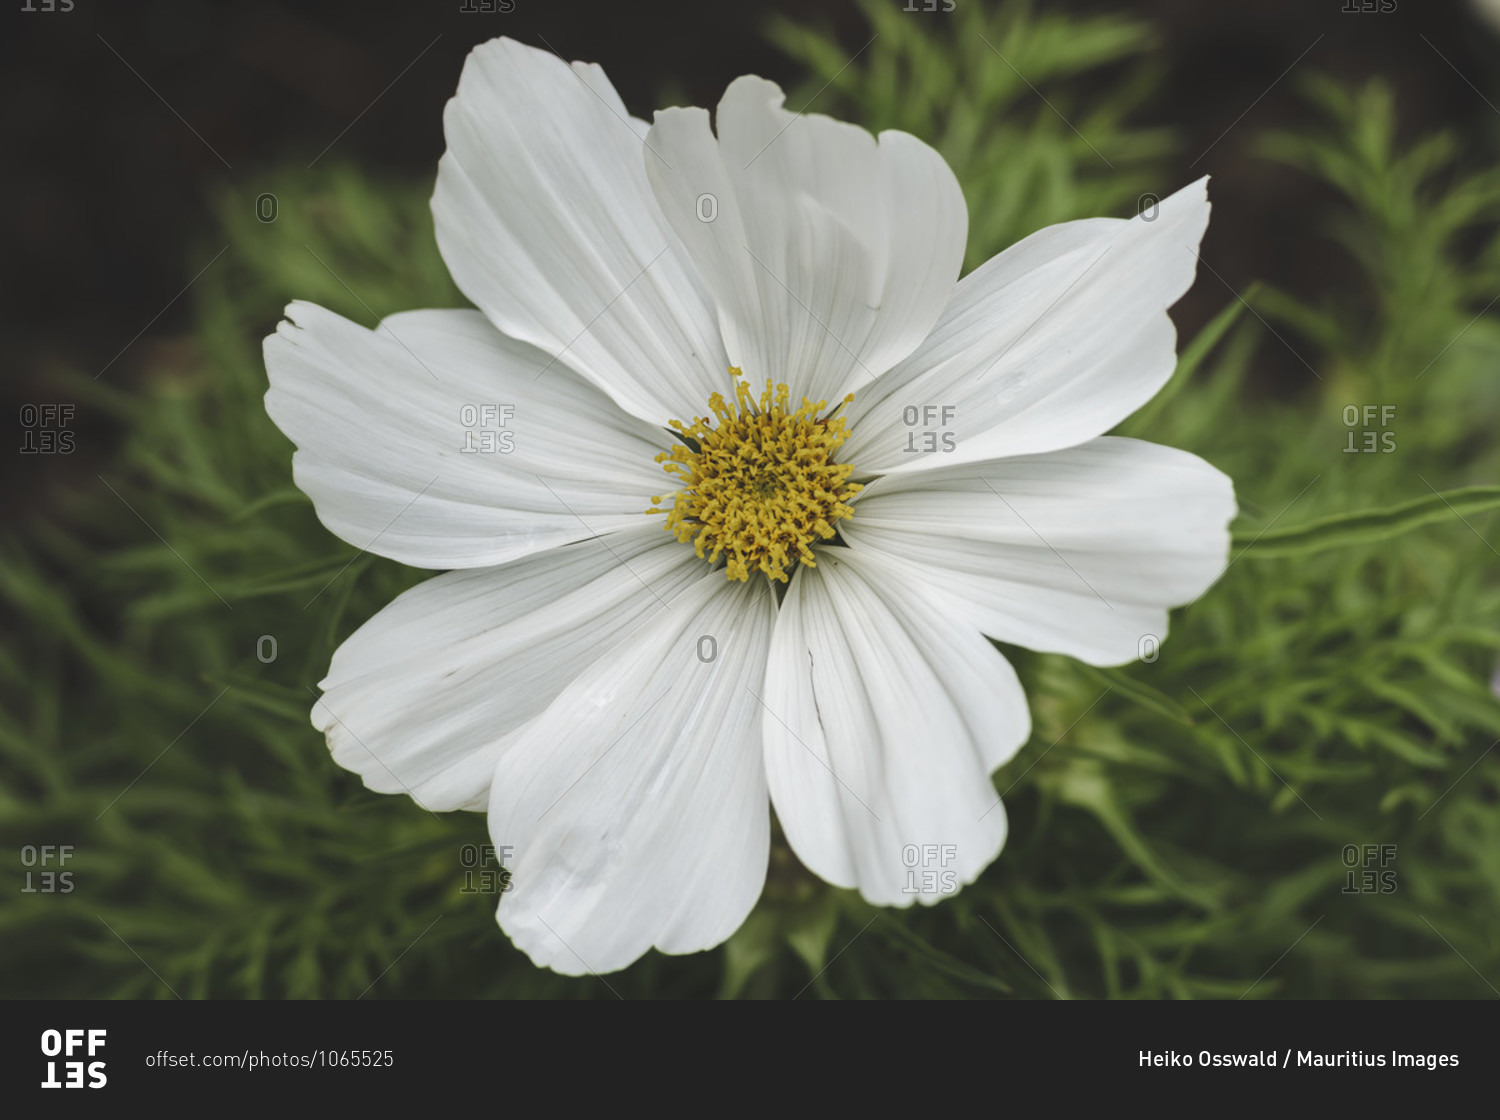 White flower, cosmea, blossom, low key, nature, garden